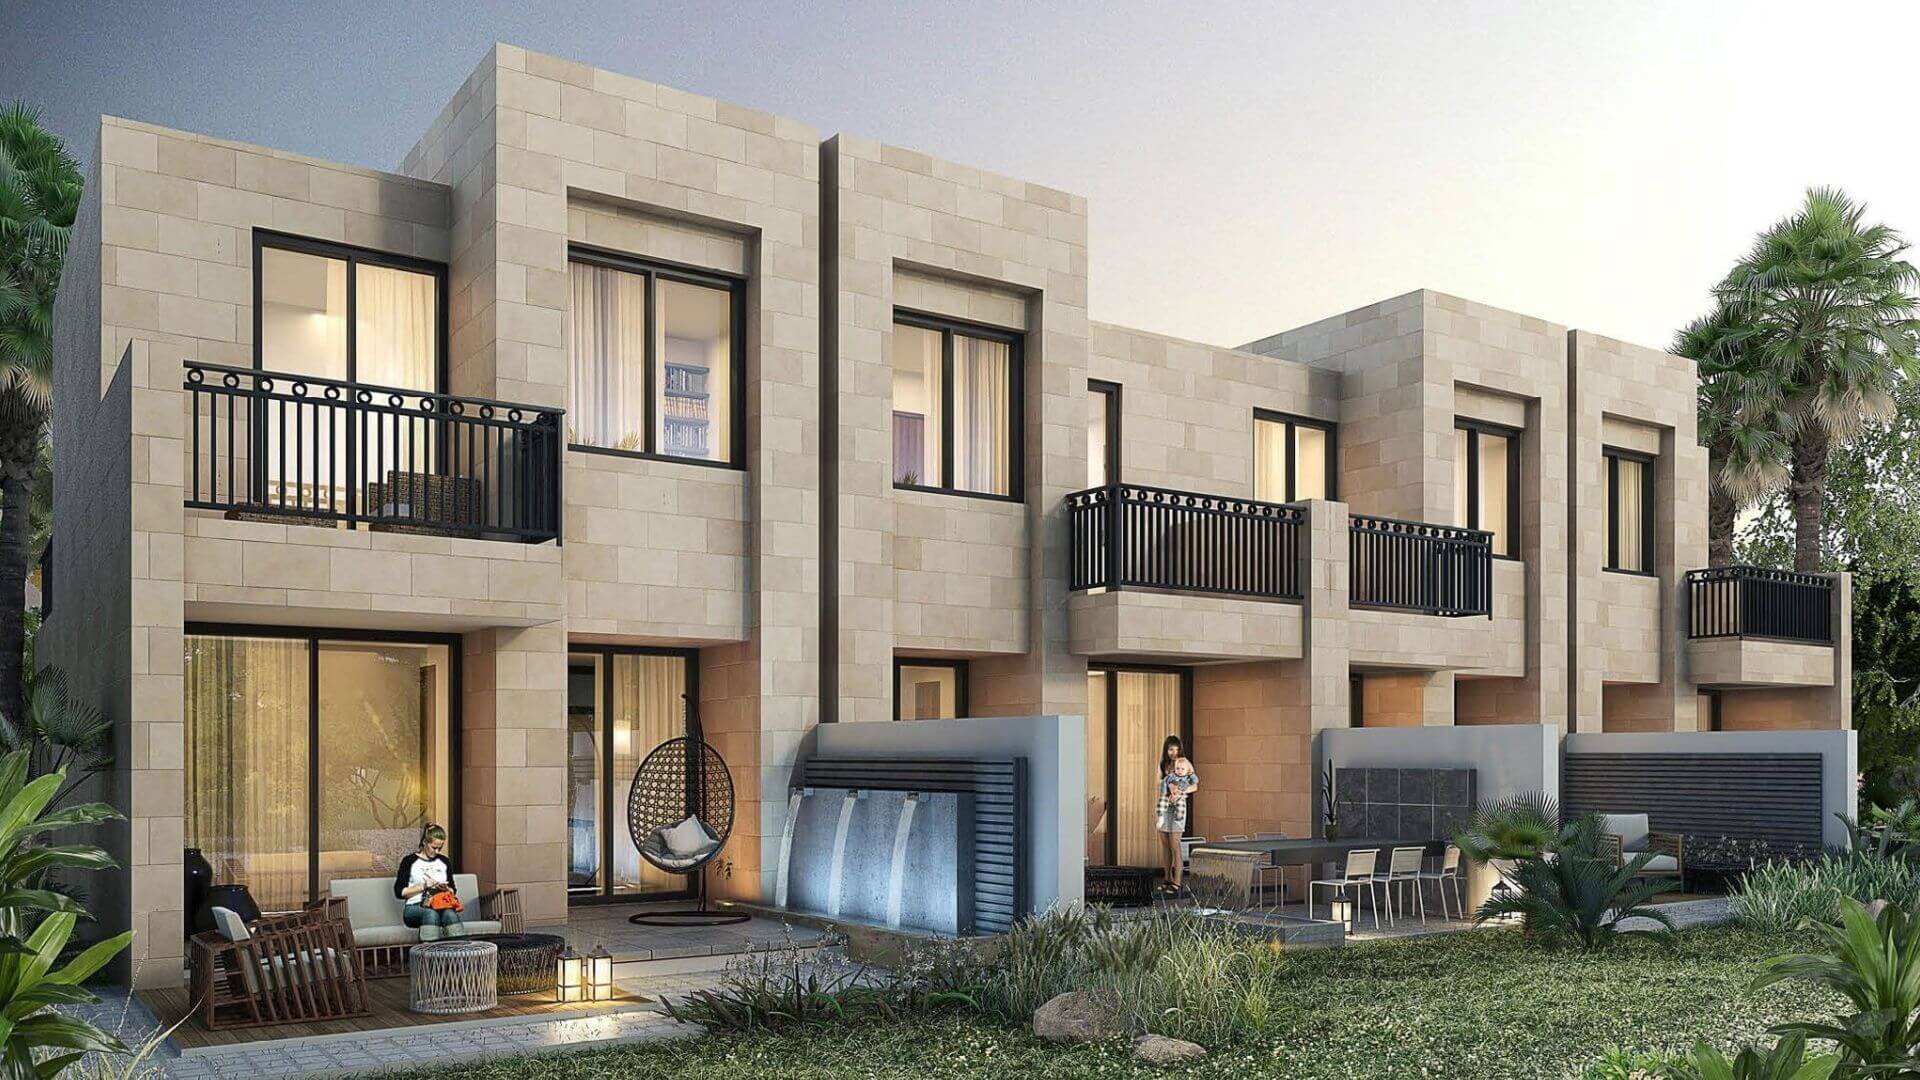 HAJAR STONE VILLAS by Damac Properties in Akoya, Dubai, UAE - 2